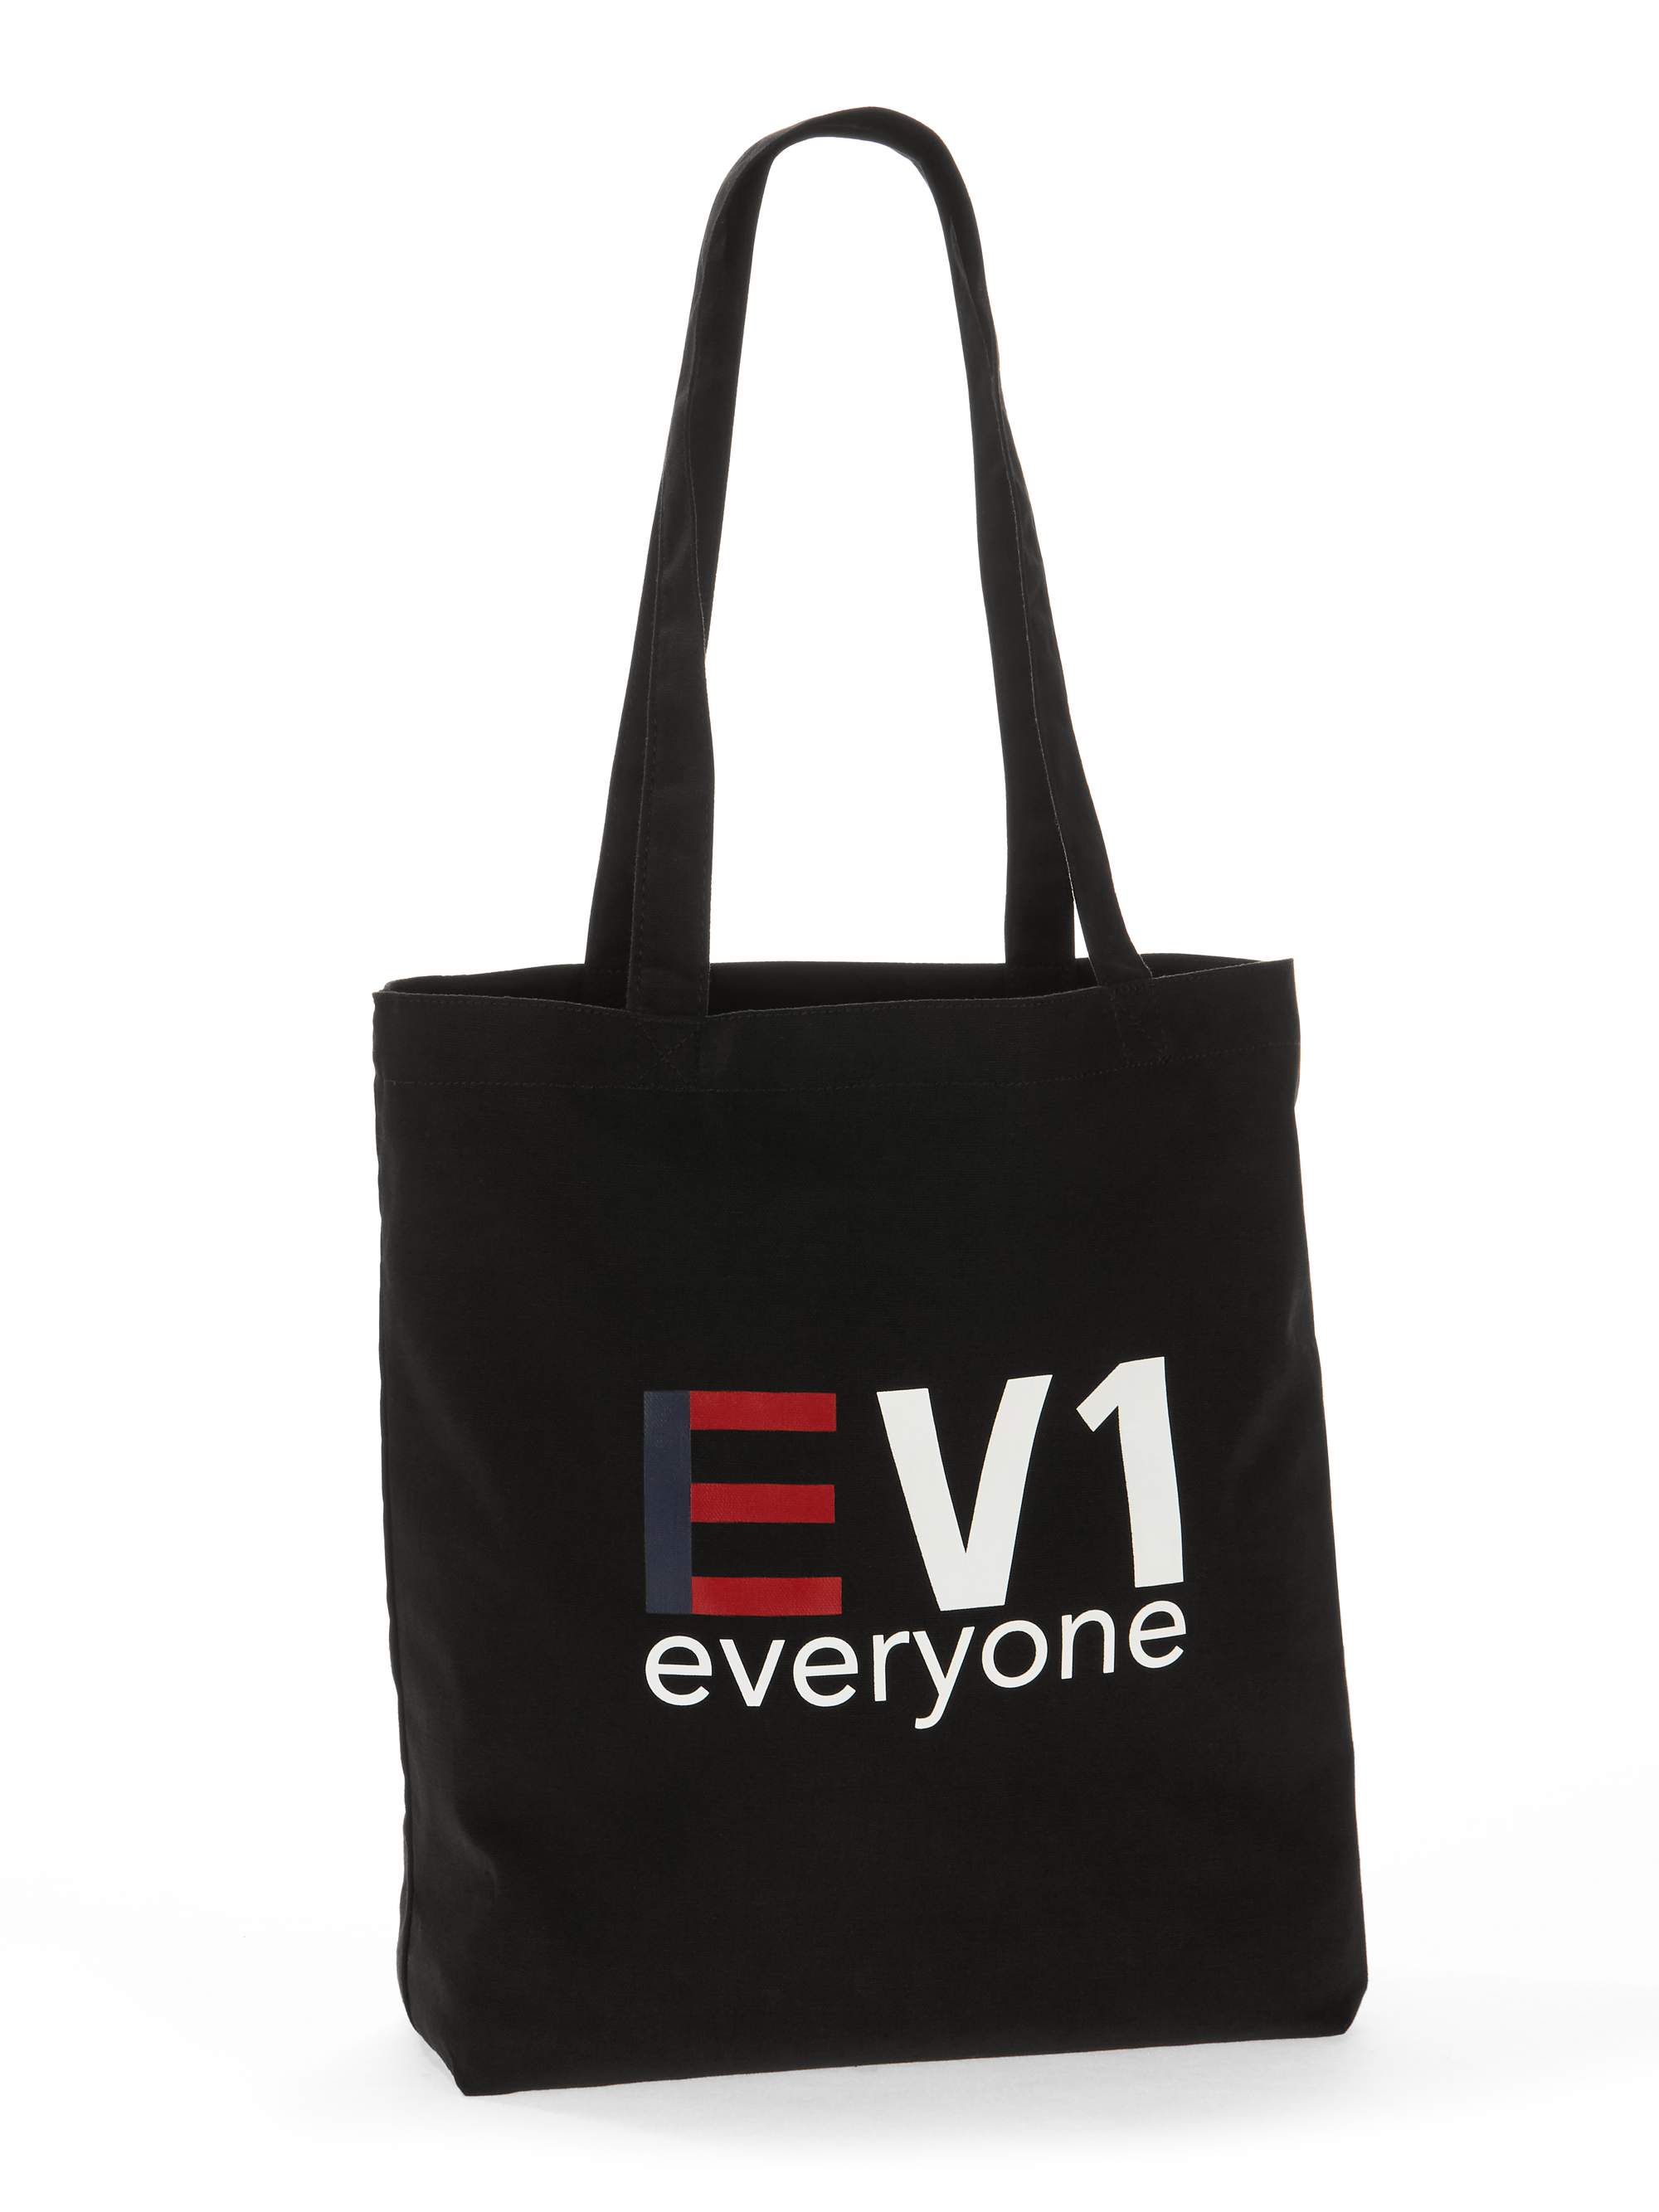 EV1 from Ellen DeGeneres "Everyone" Canvas Market Tote - image 1 of 3